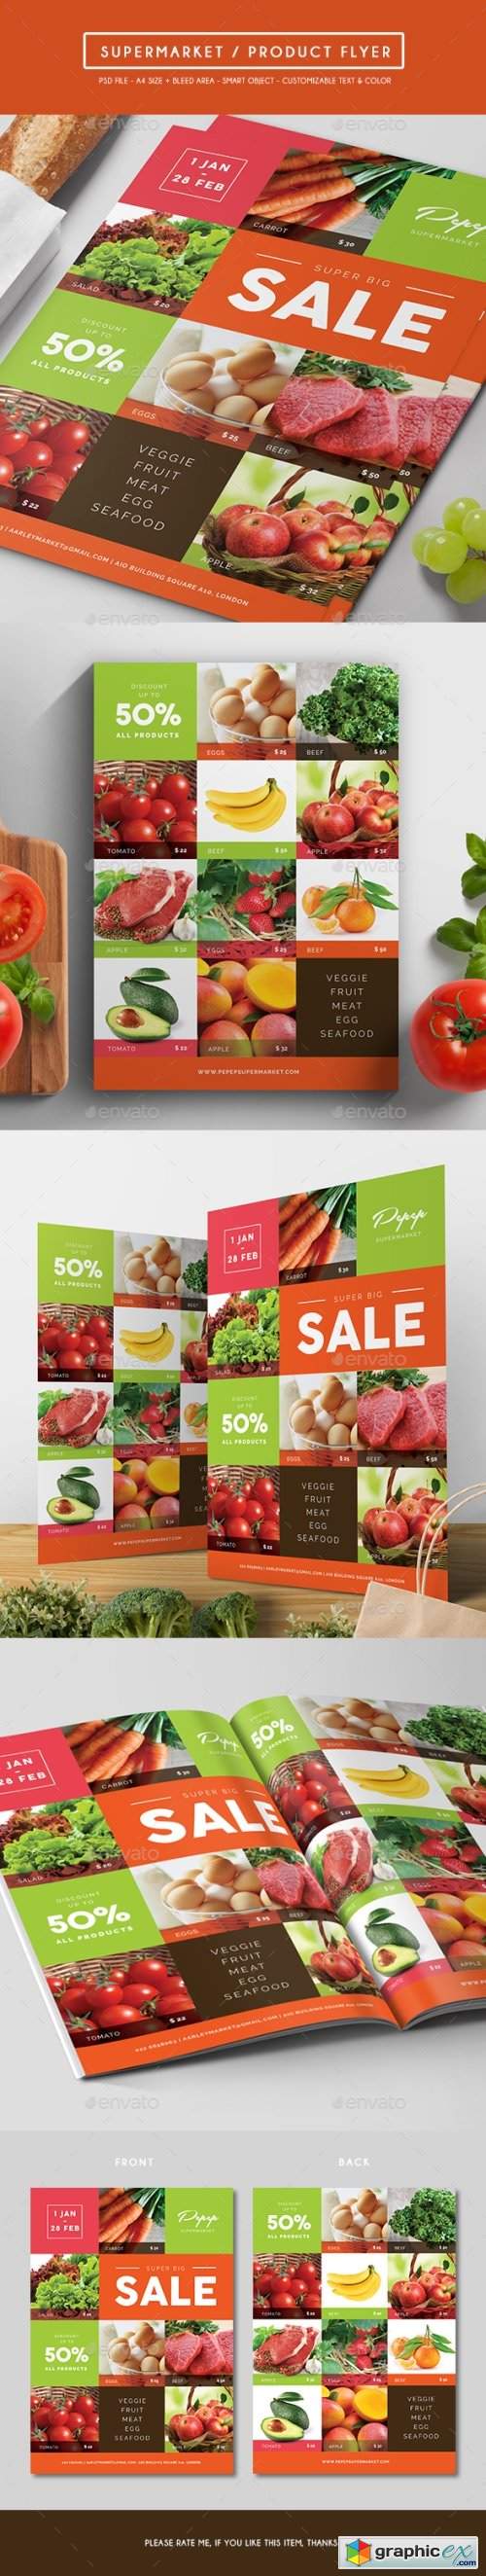 Supermarket / Product Flyer